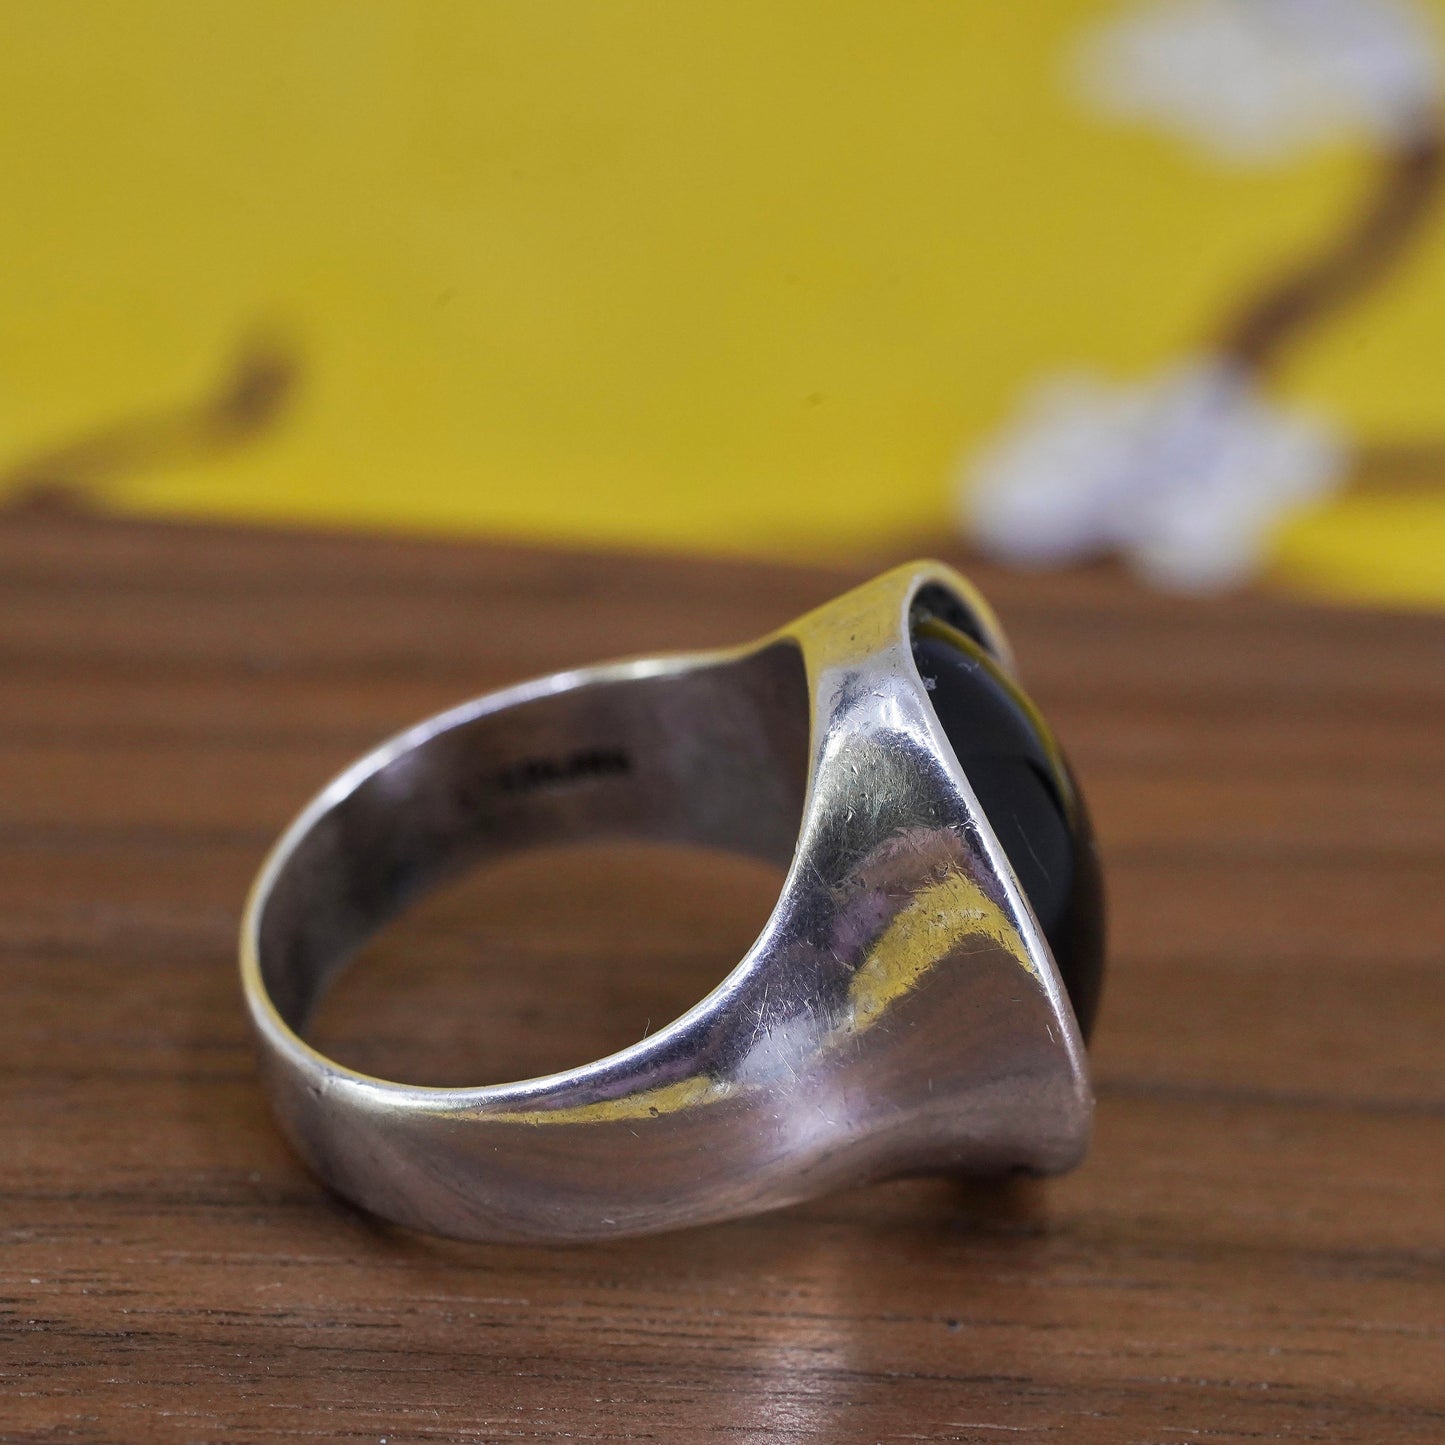 Size 7, VTG modern southwestern Sterling 925 silver handmade ring oval onyx